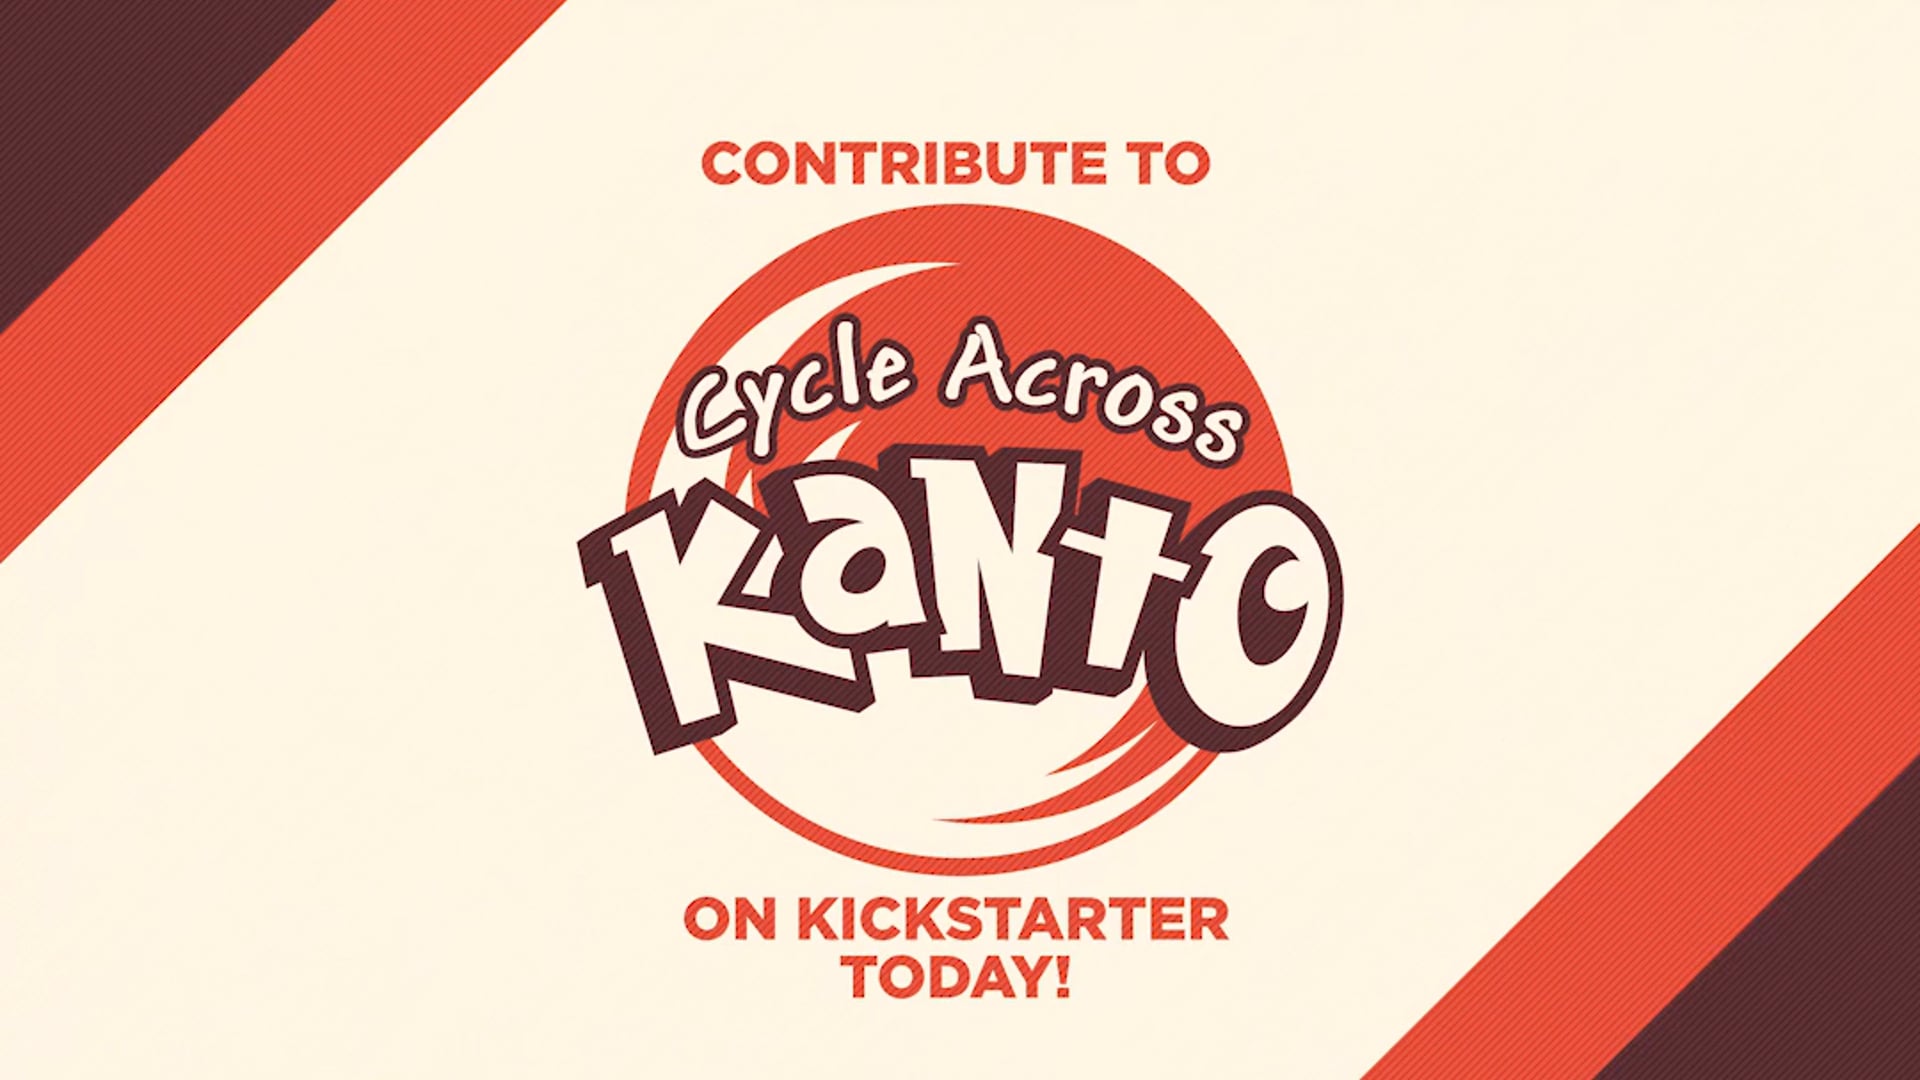 Cycle Across Kanto - Social Video